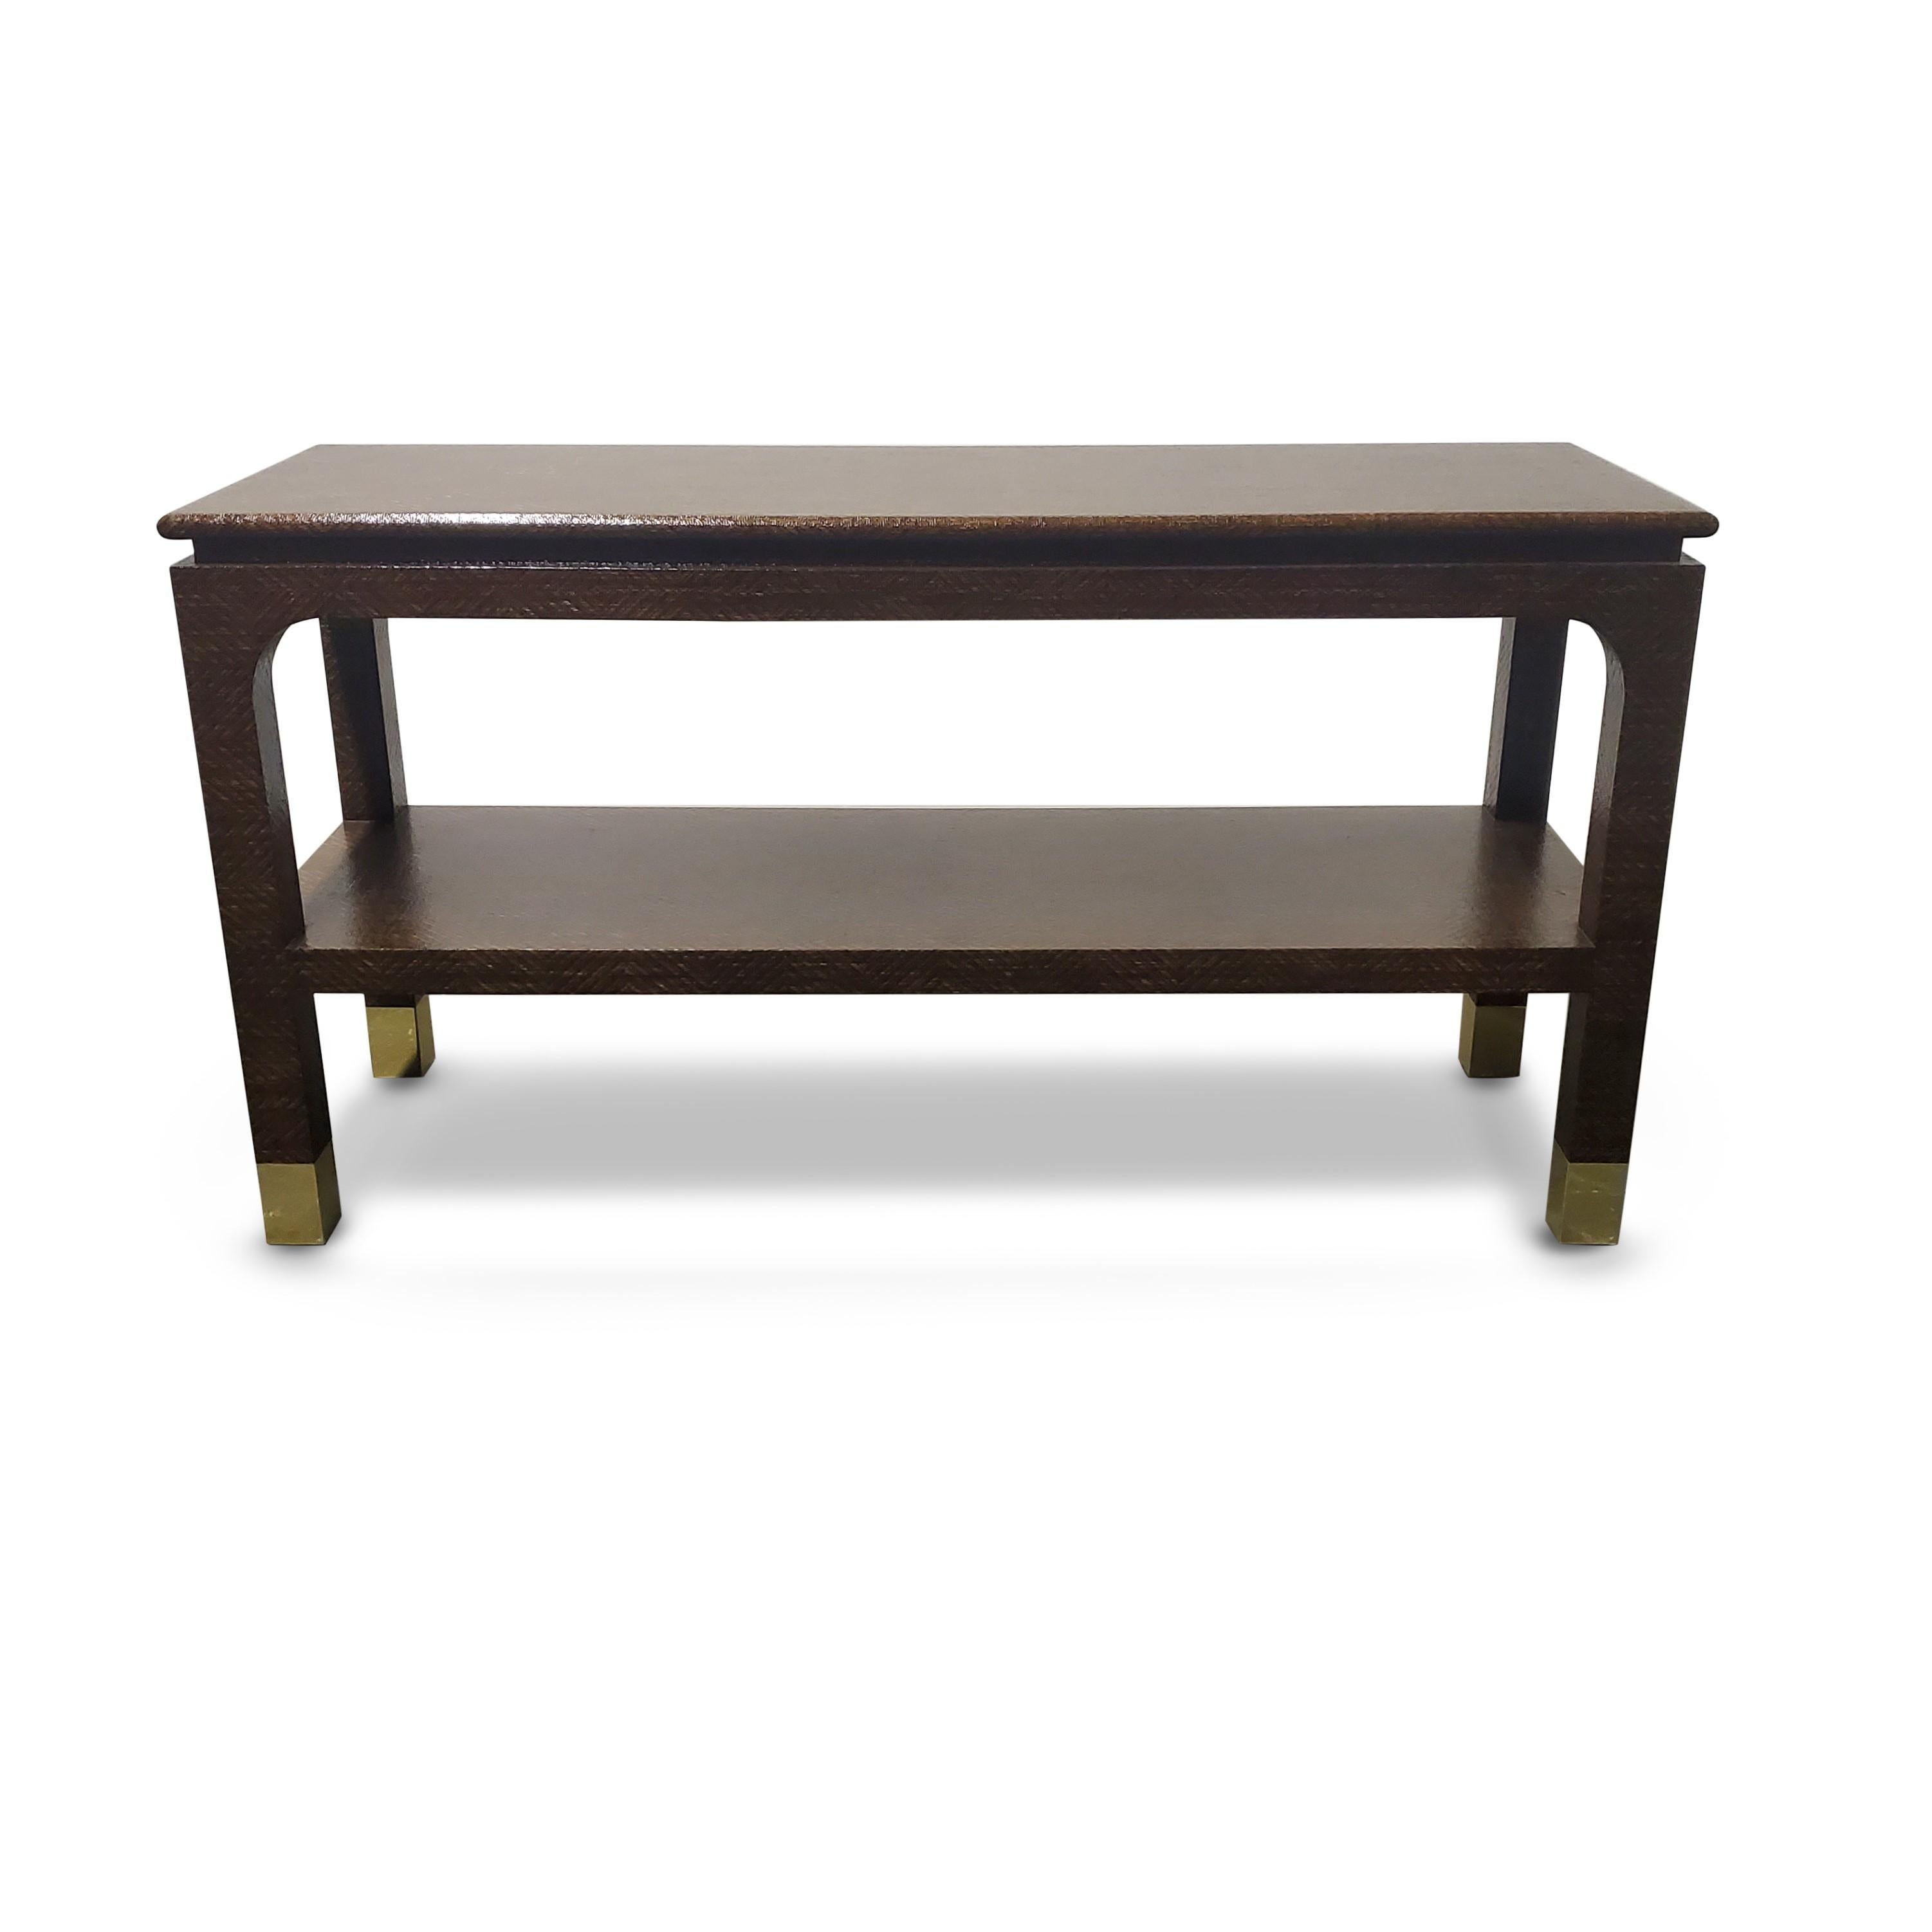 Harrison Van Horn Raffia and brass console table 

Measurement:

Floor to Lower Shelf: 14.5